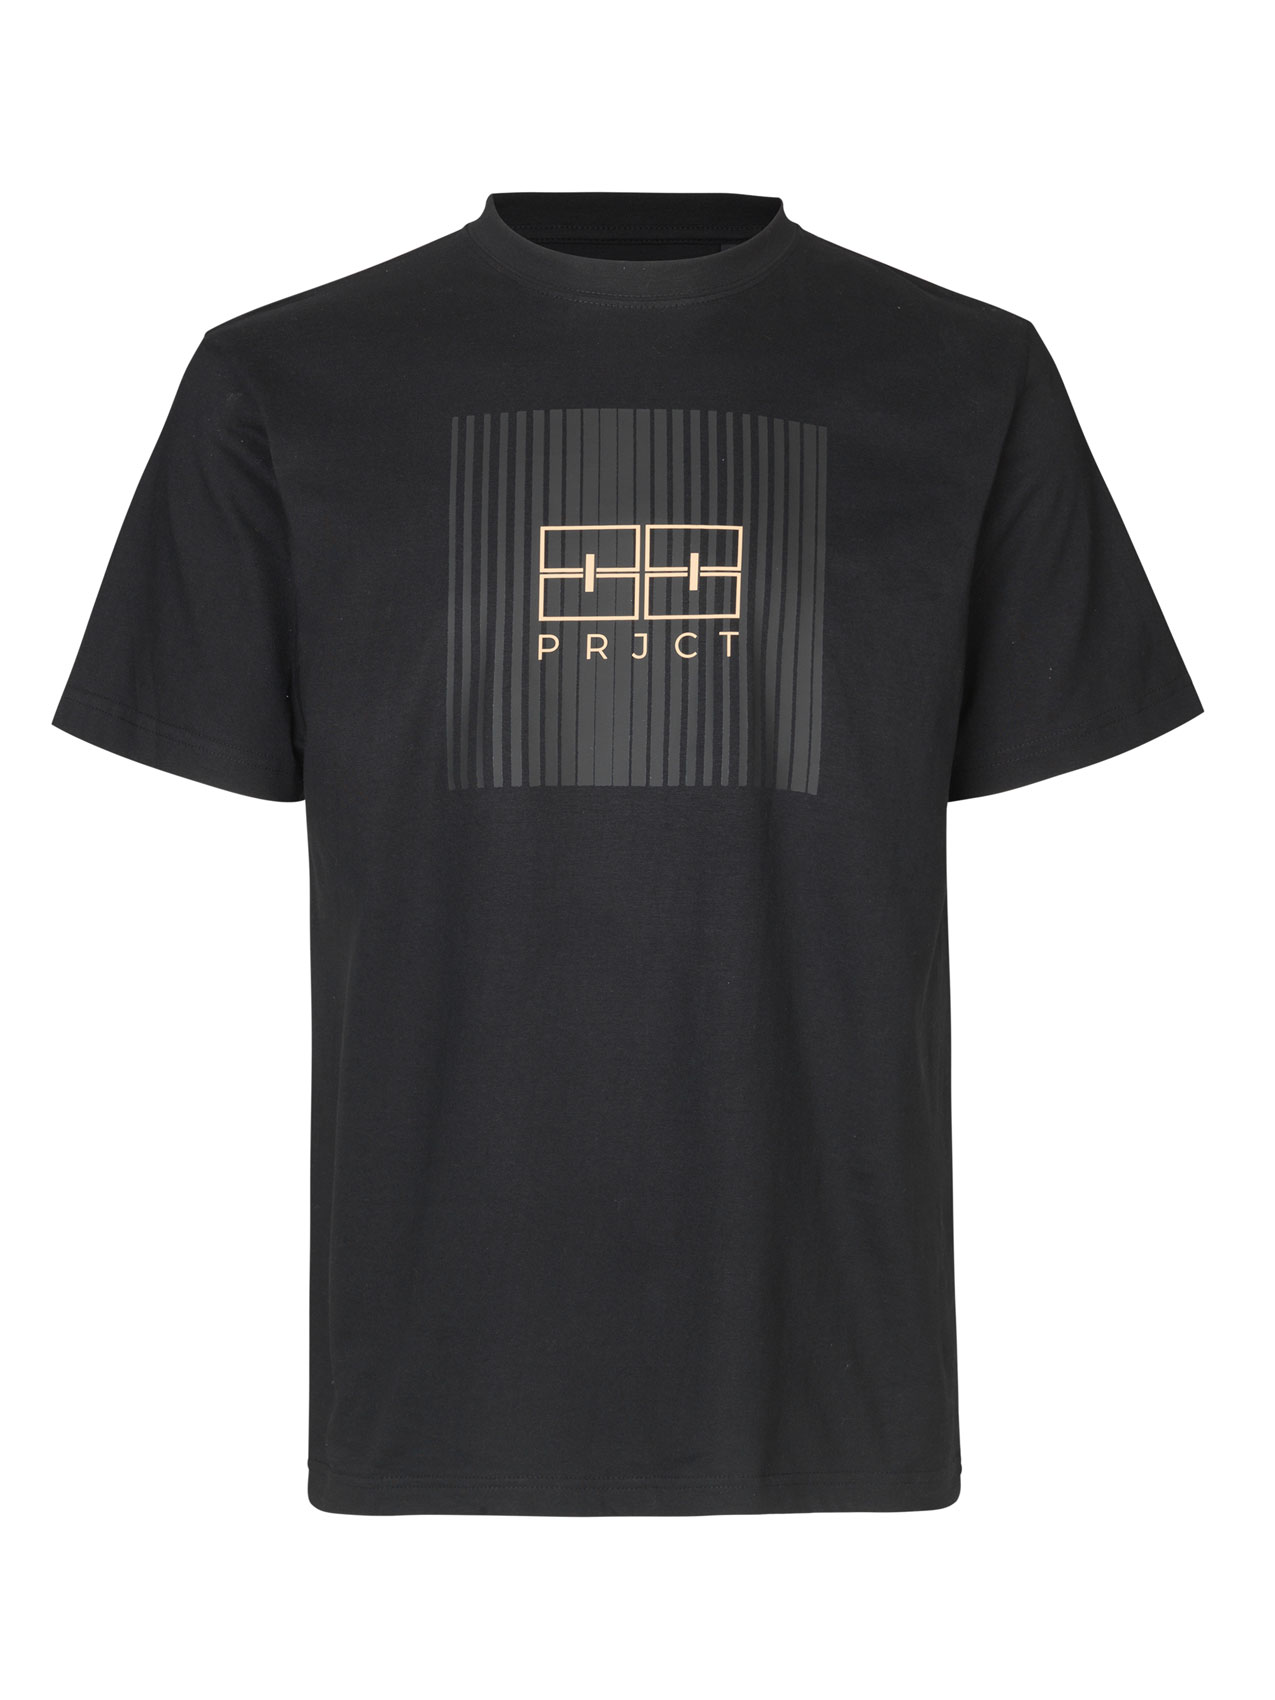 FOR LIVET BROR T-Shirt With Front Box Logo - Black